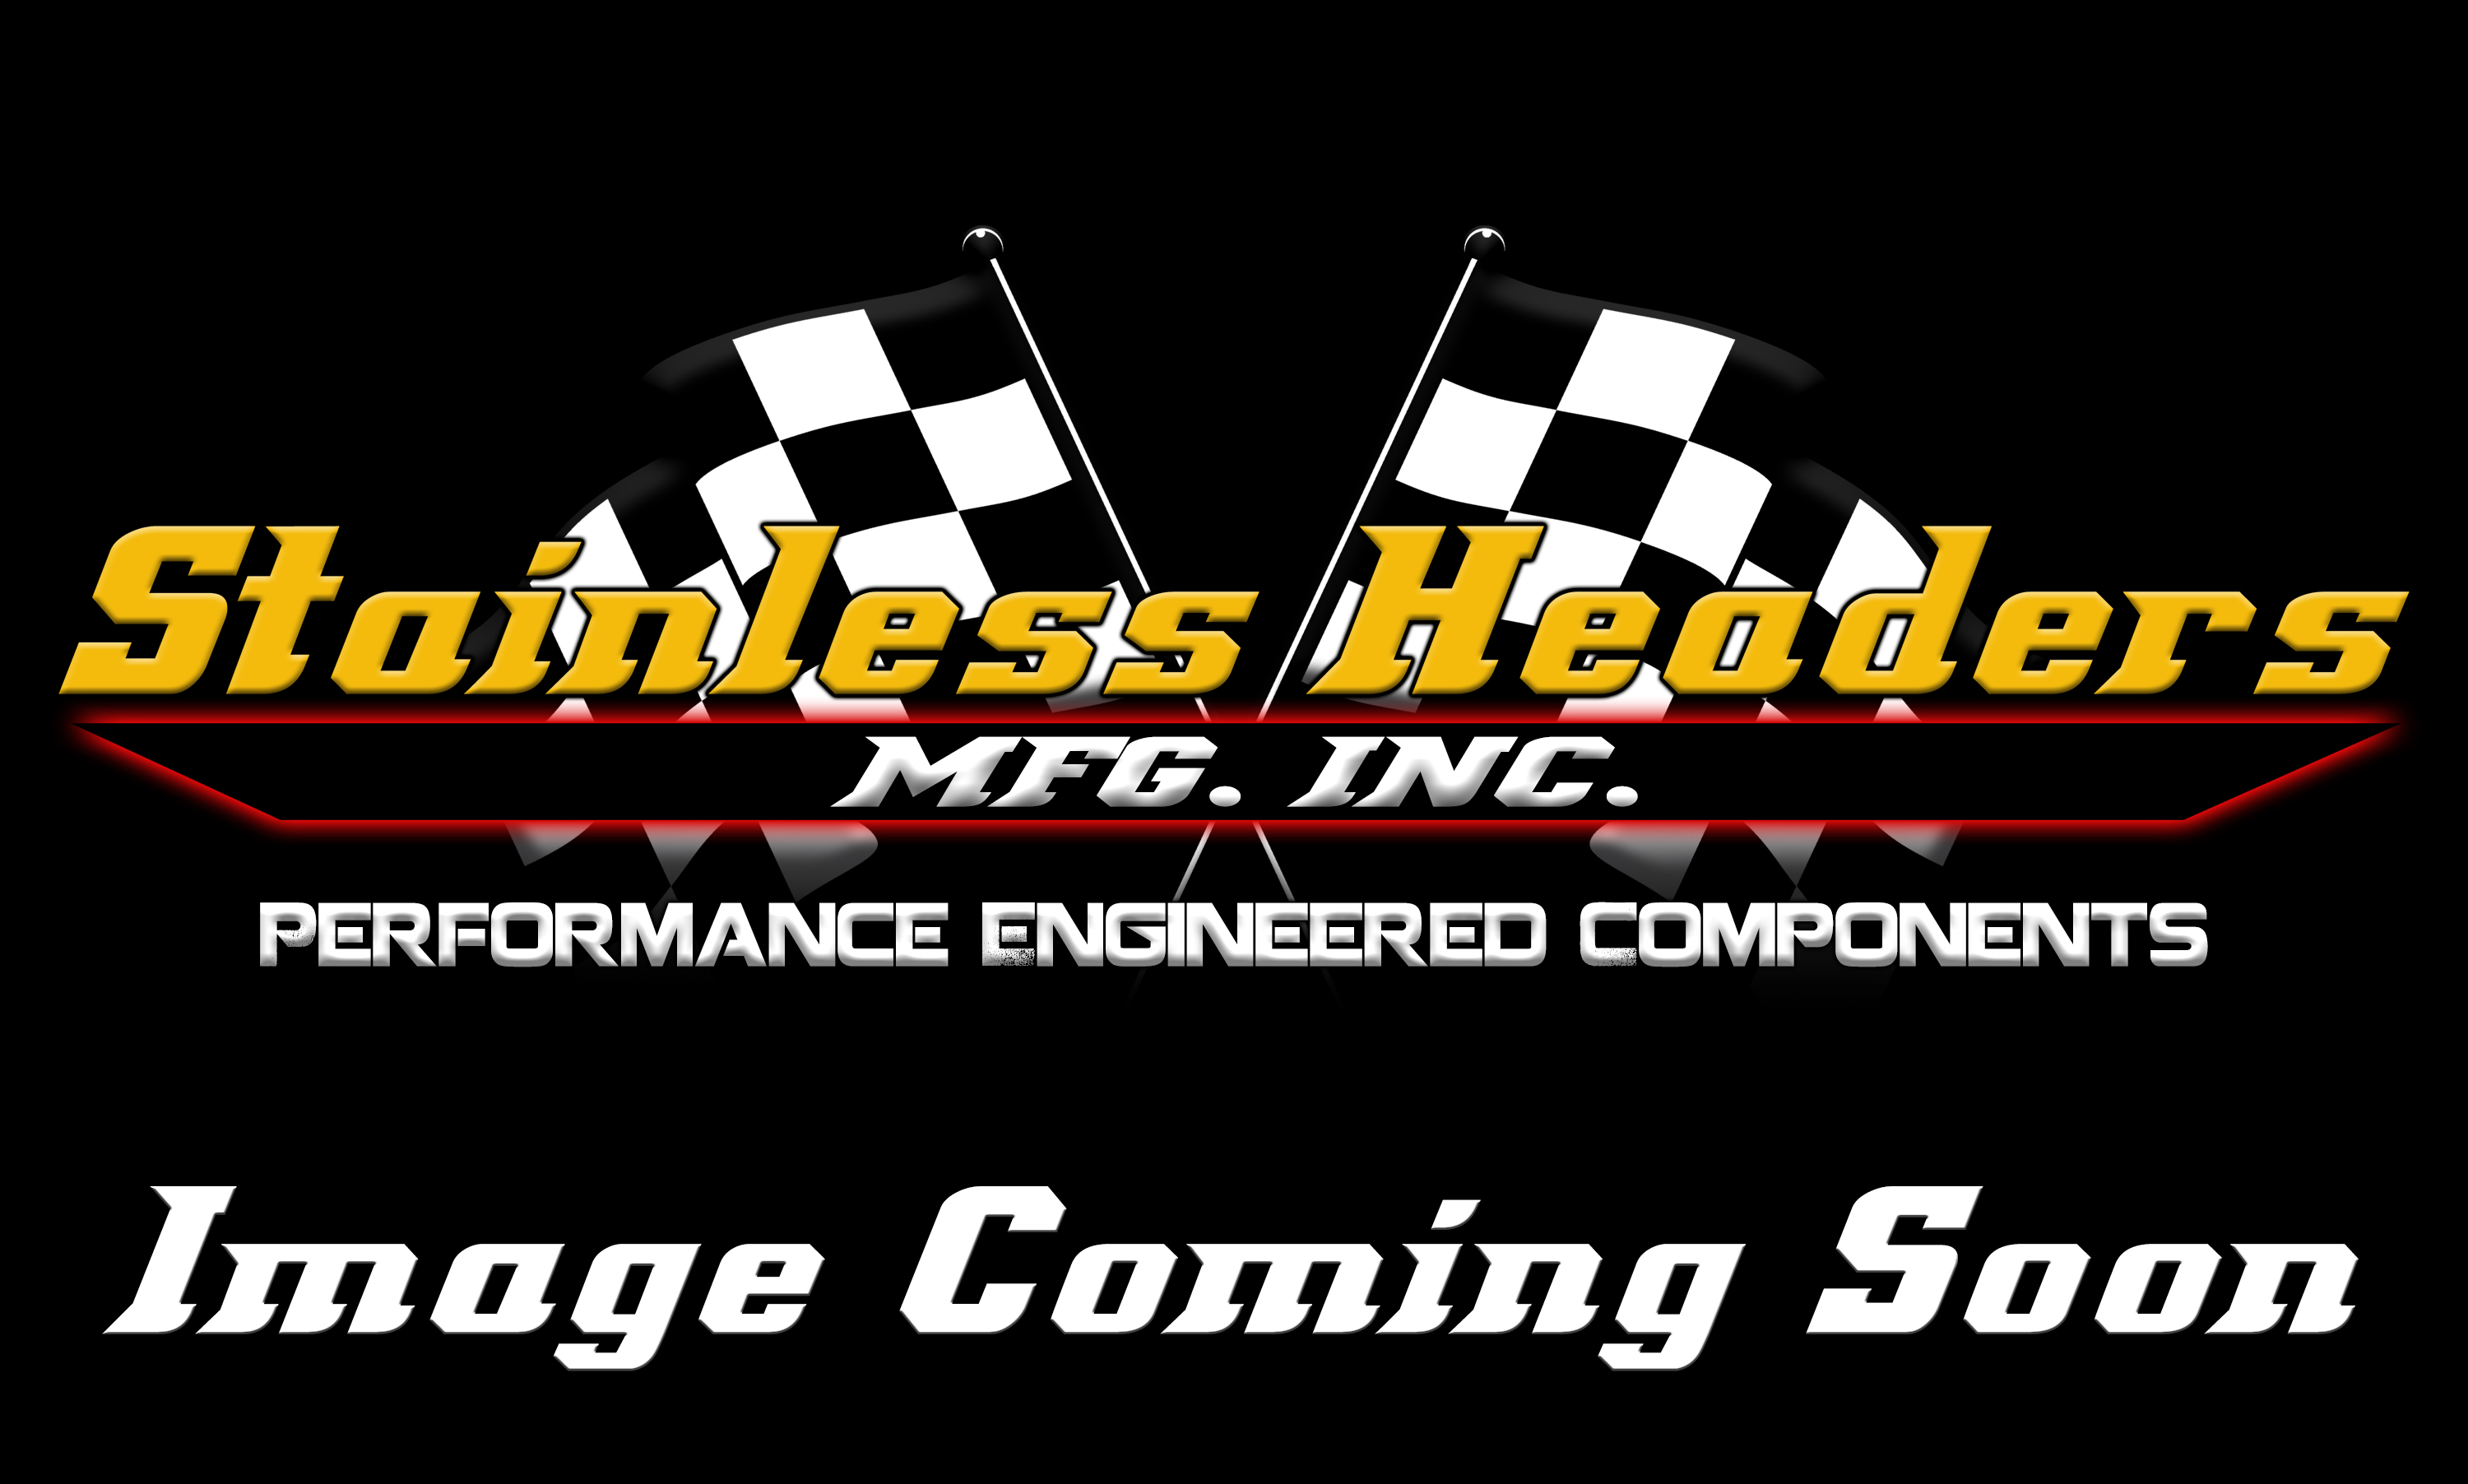 Stainless Headers - Small Block Ford-W Dart Pro1 225 cc Custom Turbo Header Build Kit - Image 5